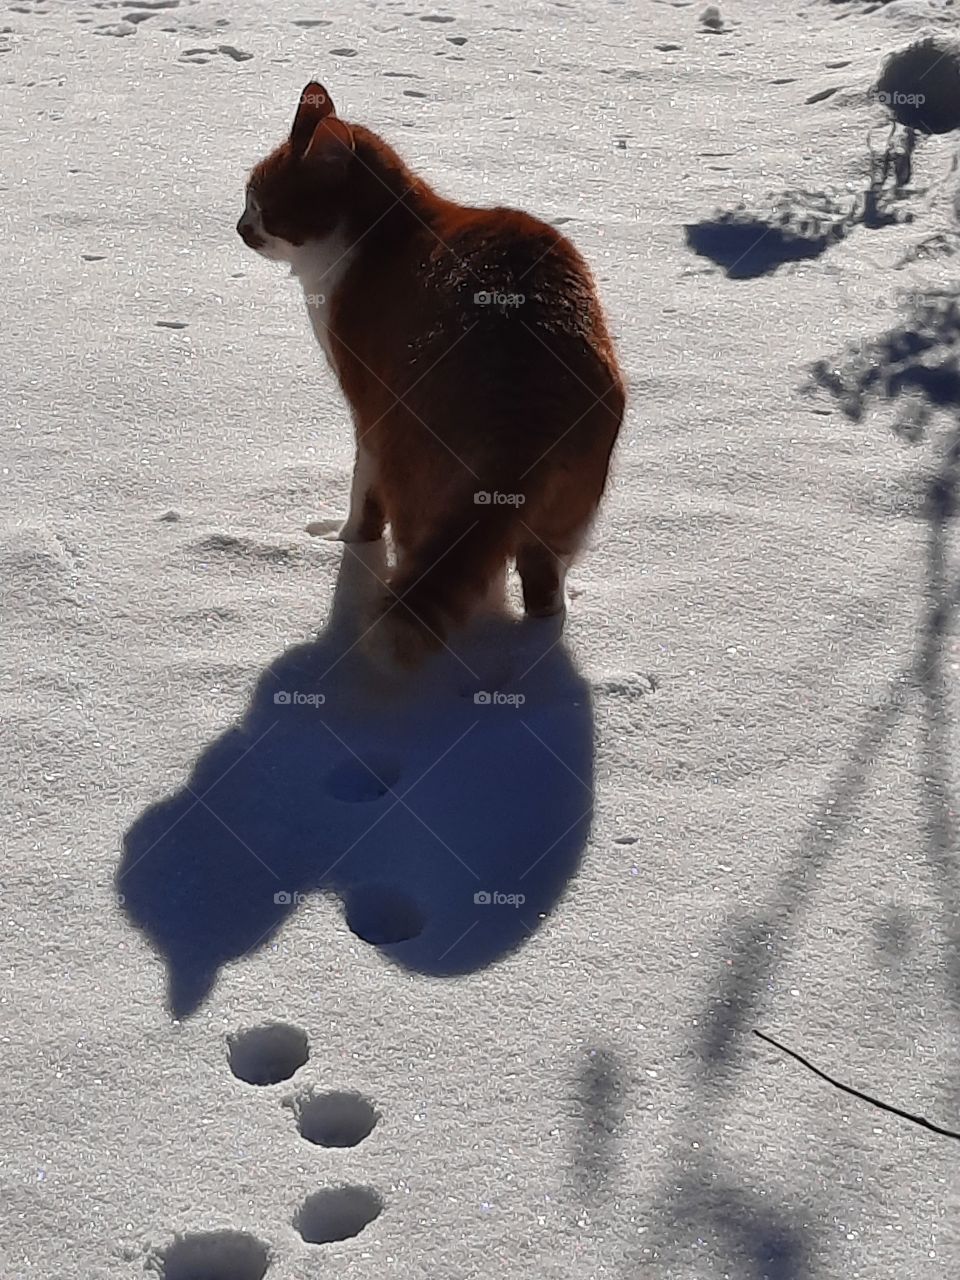 my ginger cat Cara enjoying sun and fresh snow